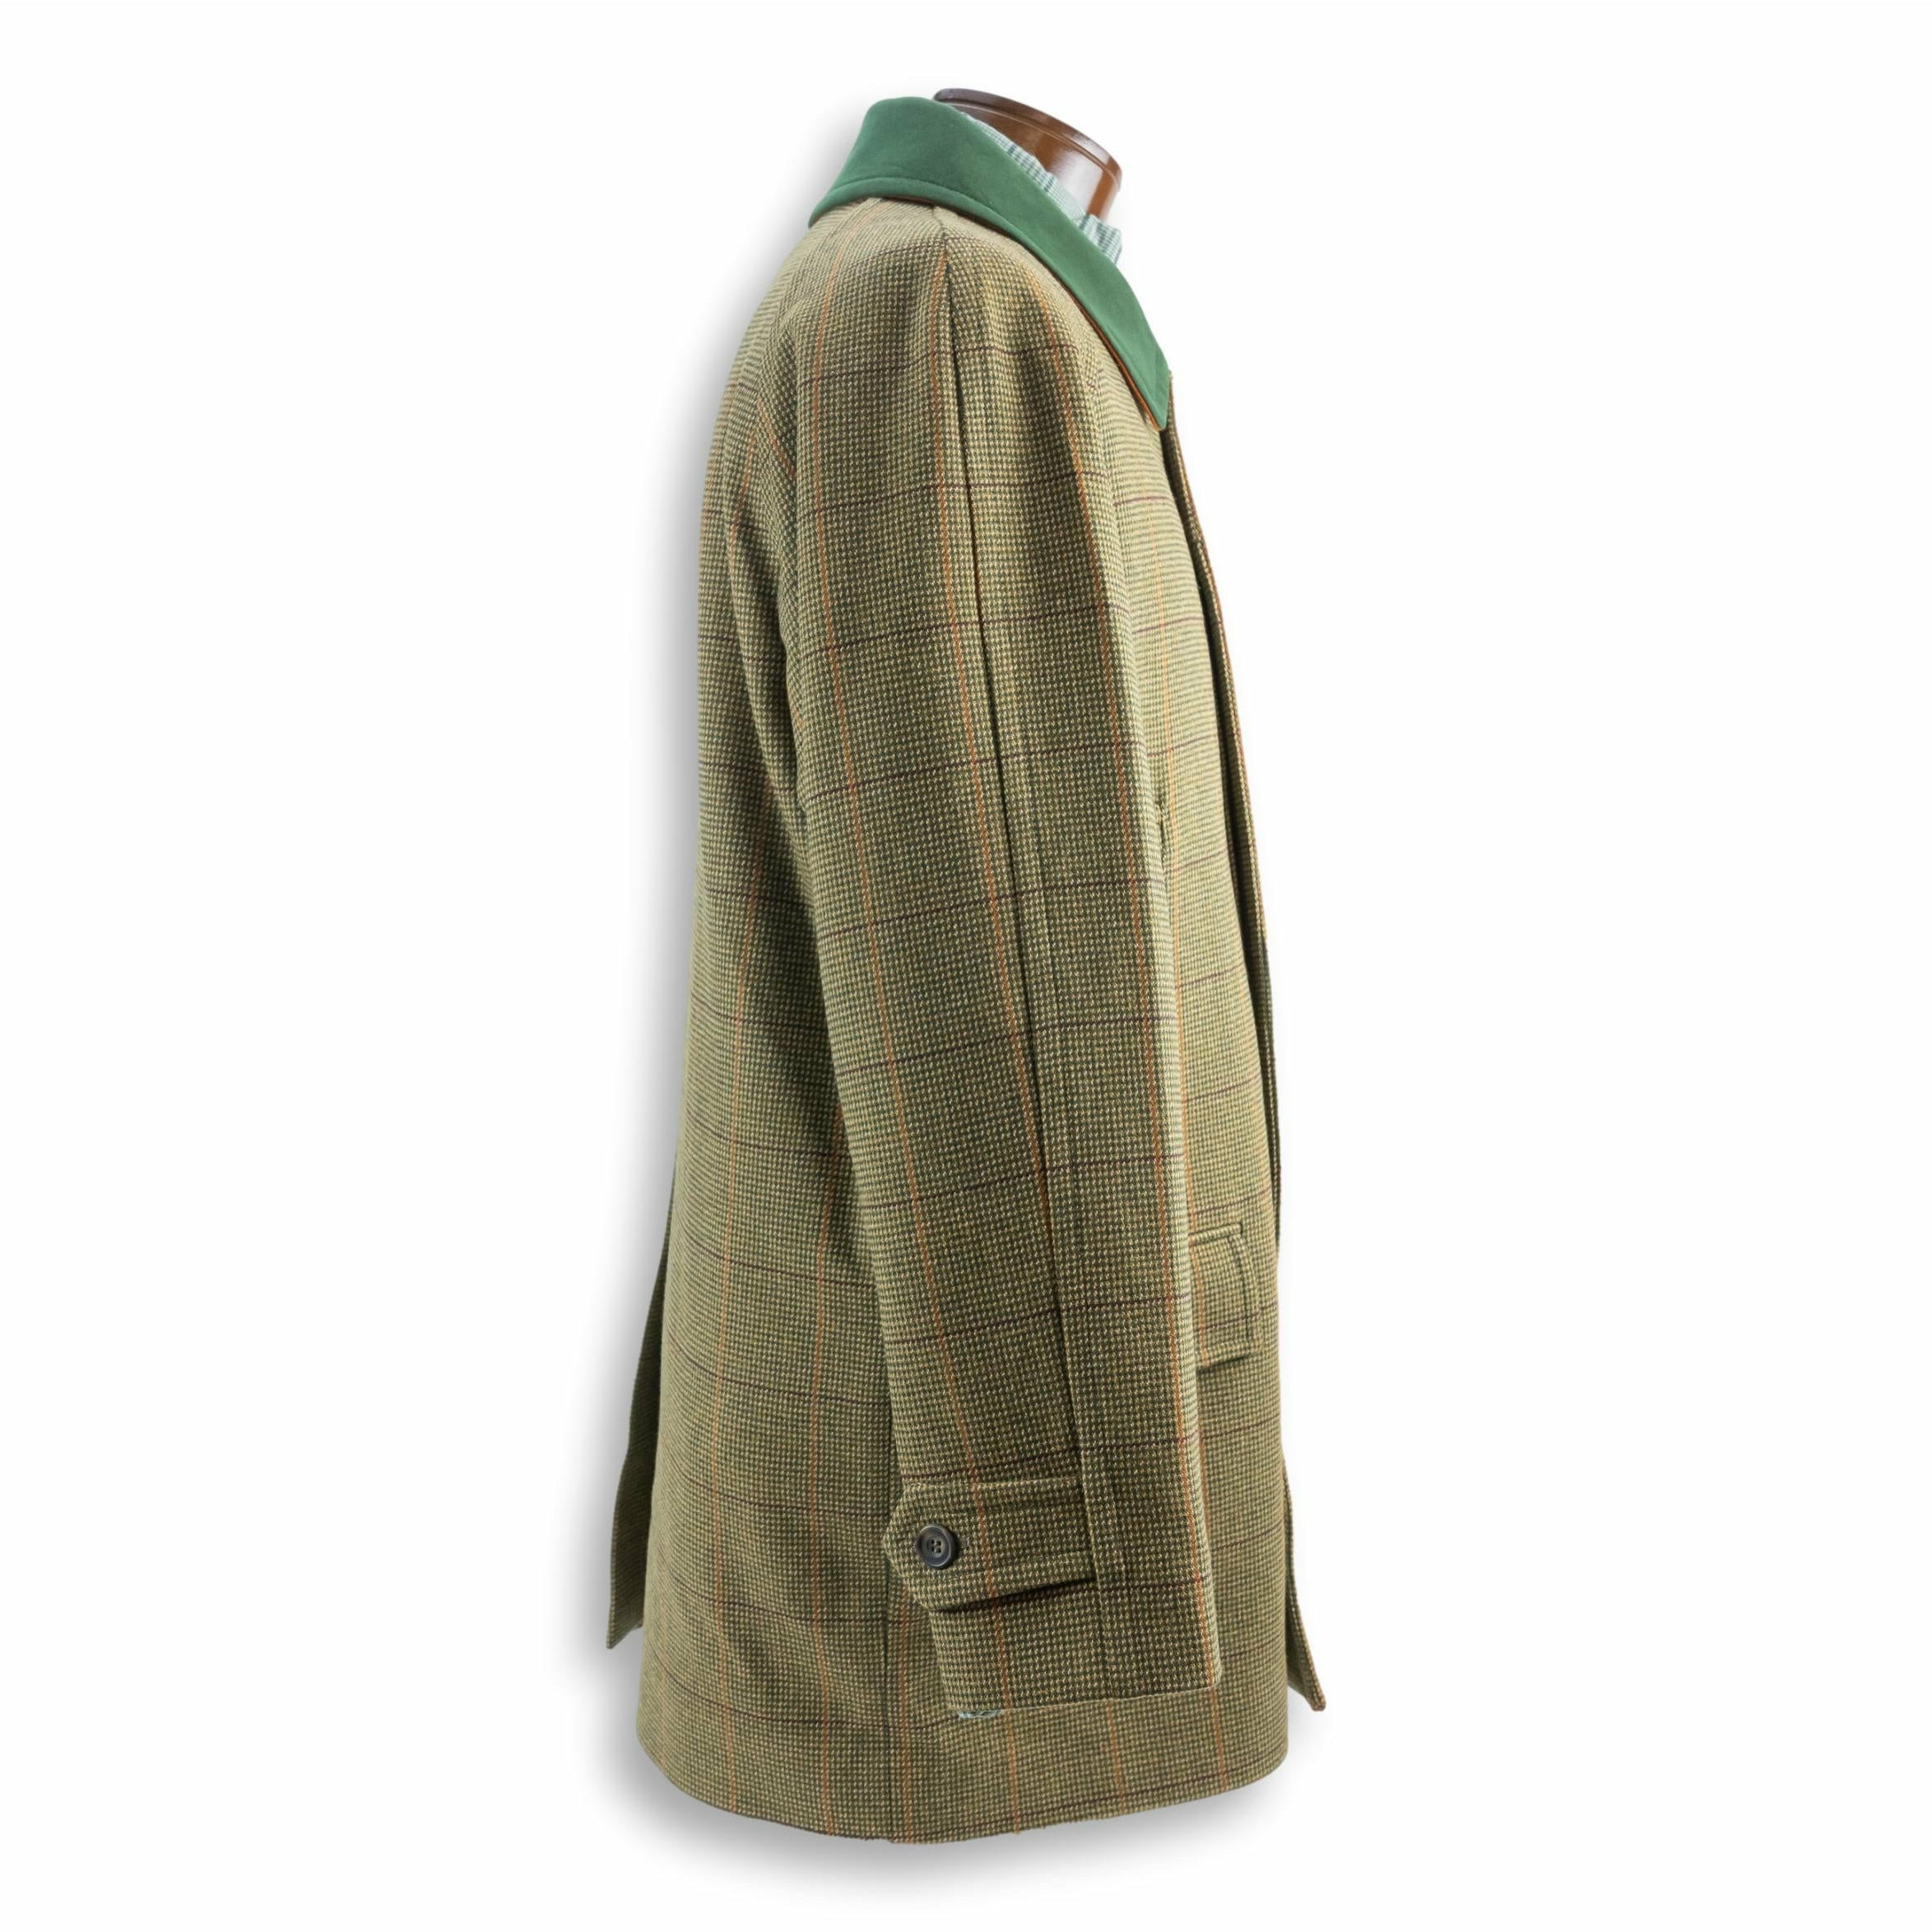 Chrysalis New Quantock Tweed Walking Coat